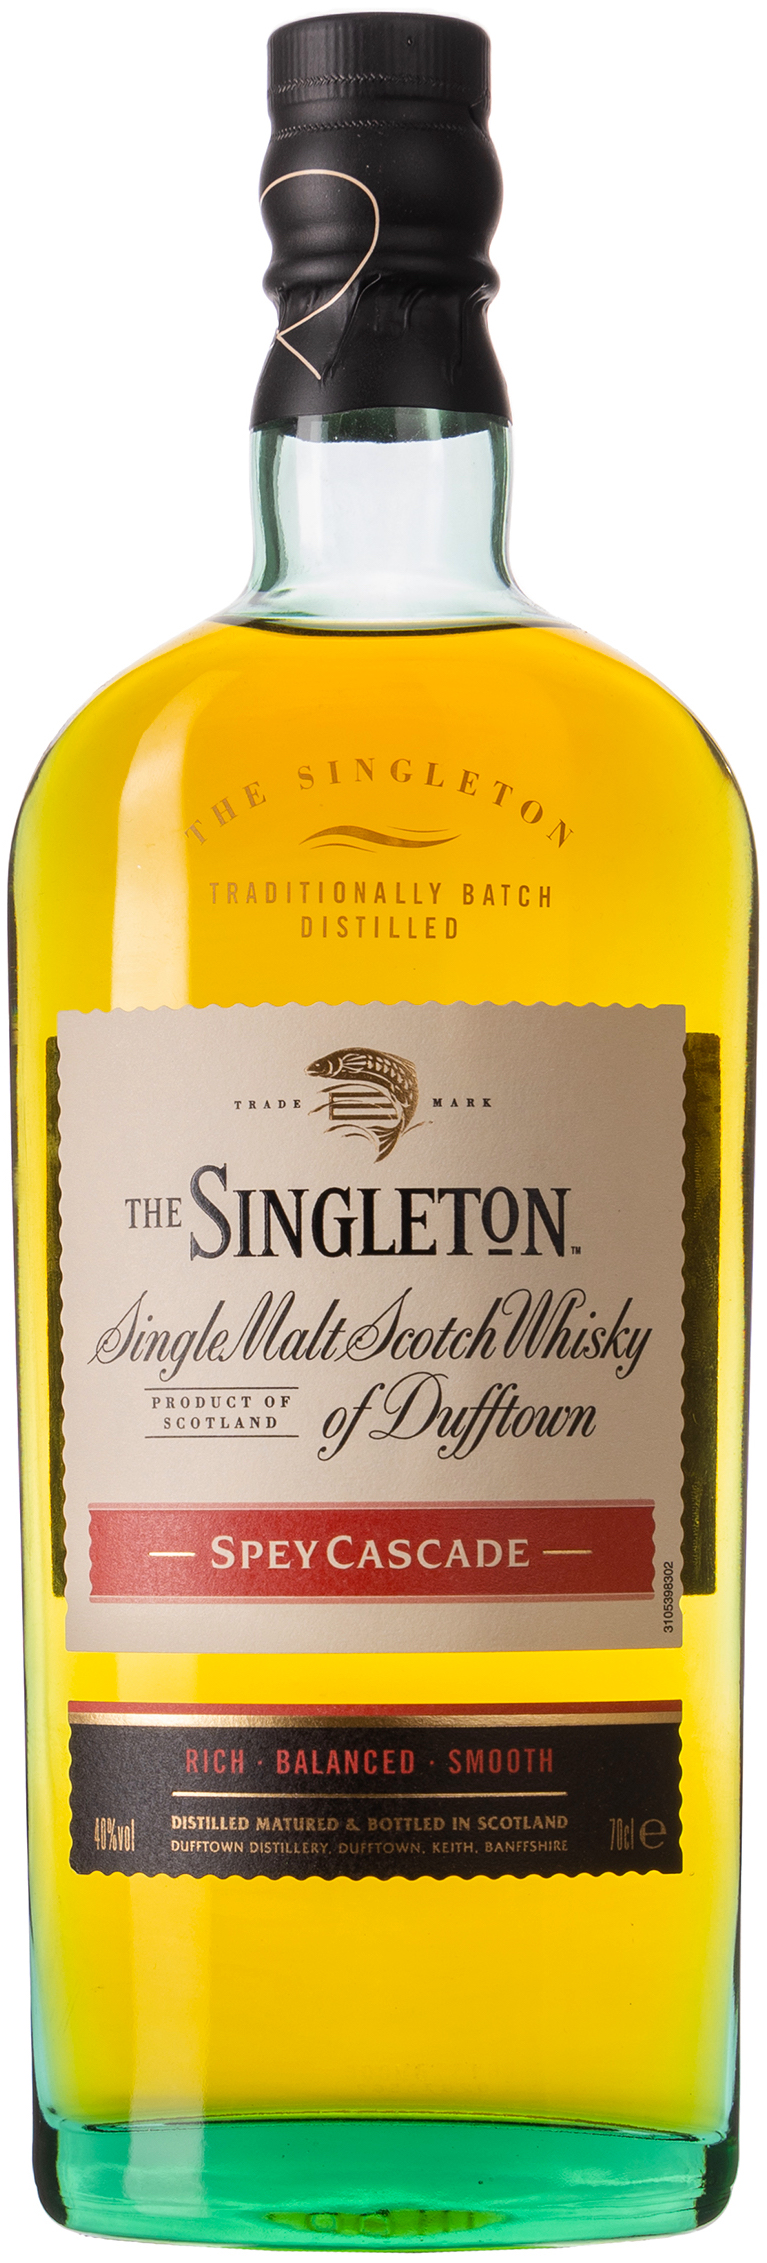 The Singleton Single Malt Sctoch Whisky of Dufftown 12 Years Old 40% vol. 0,7L